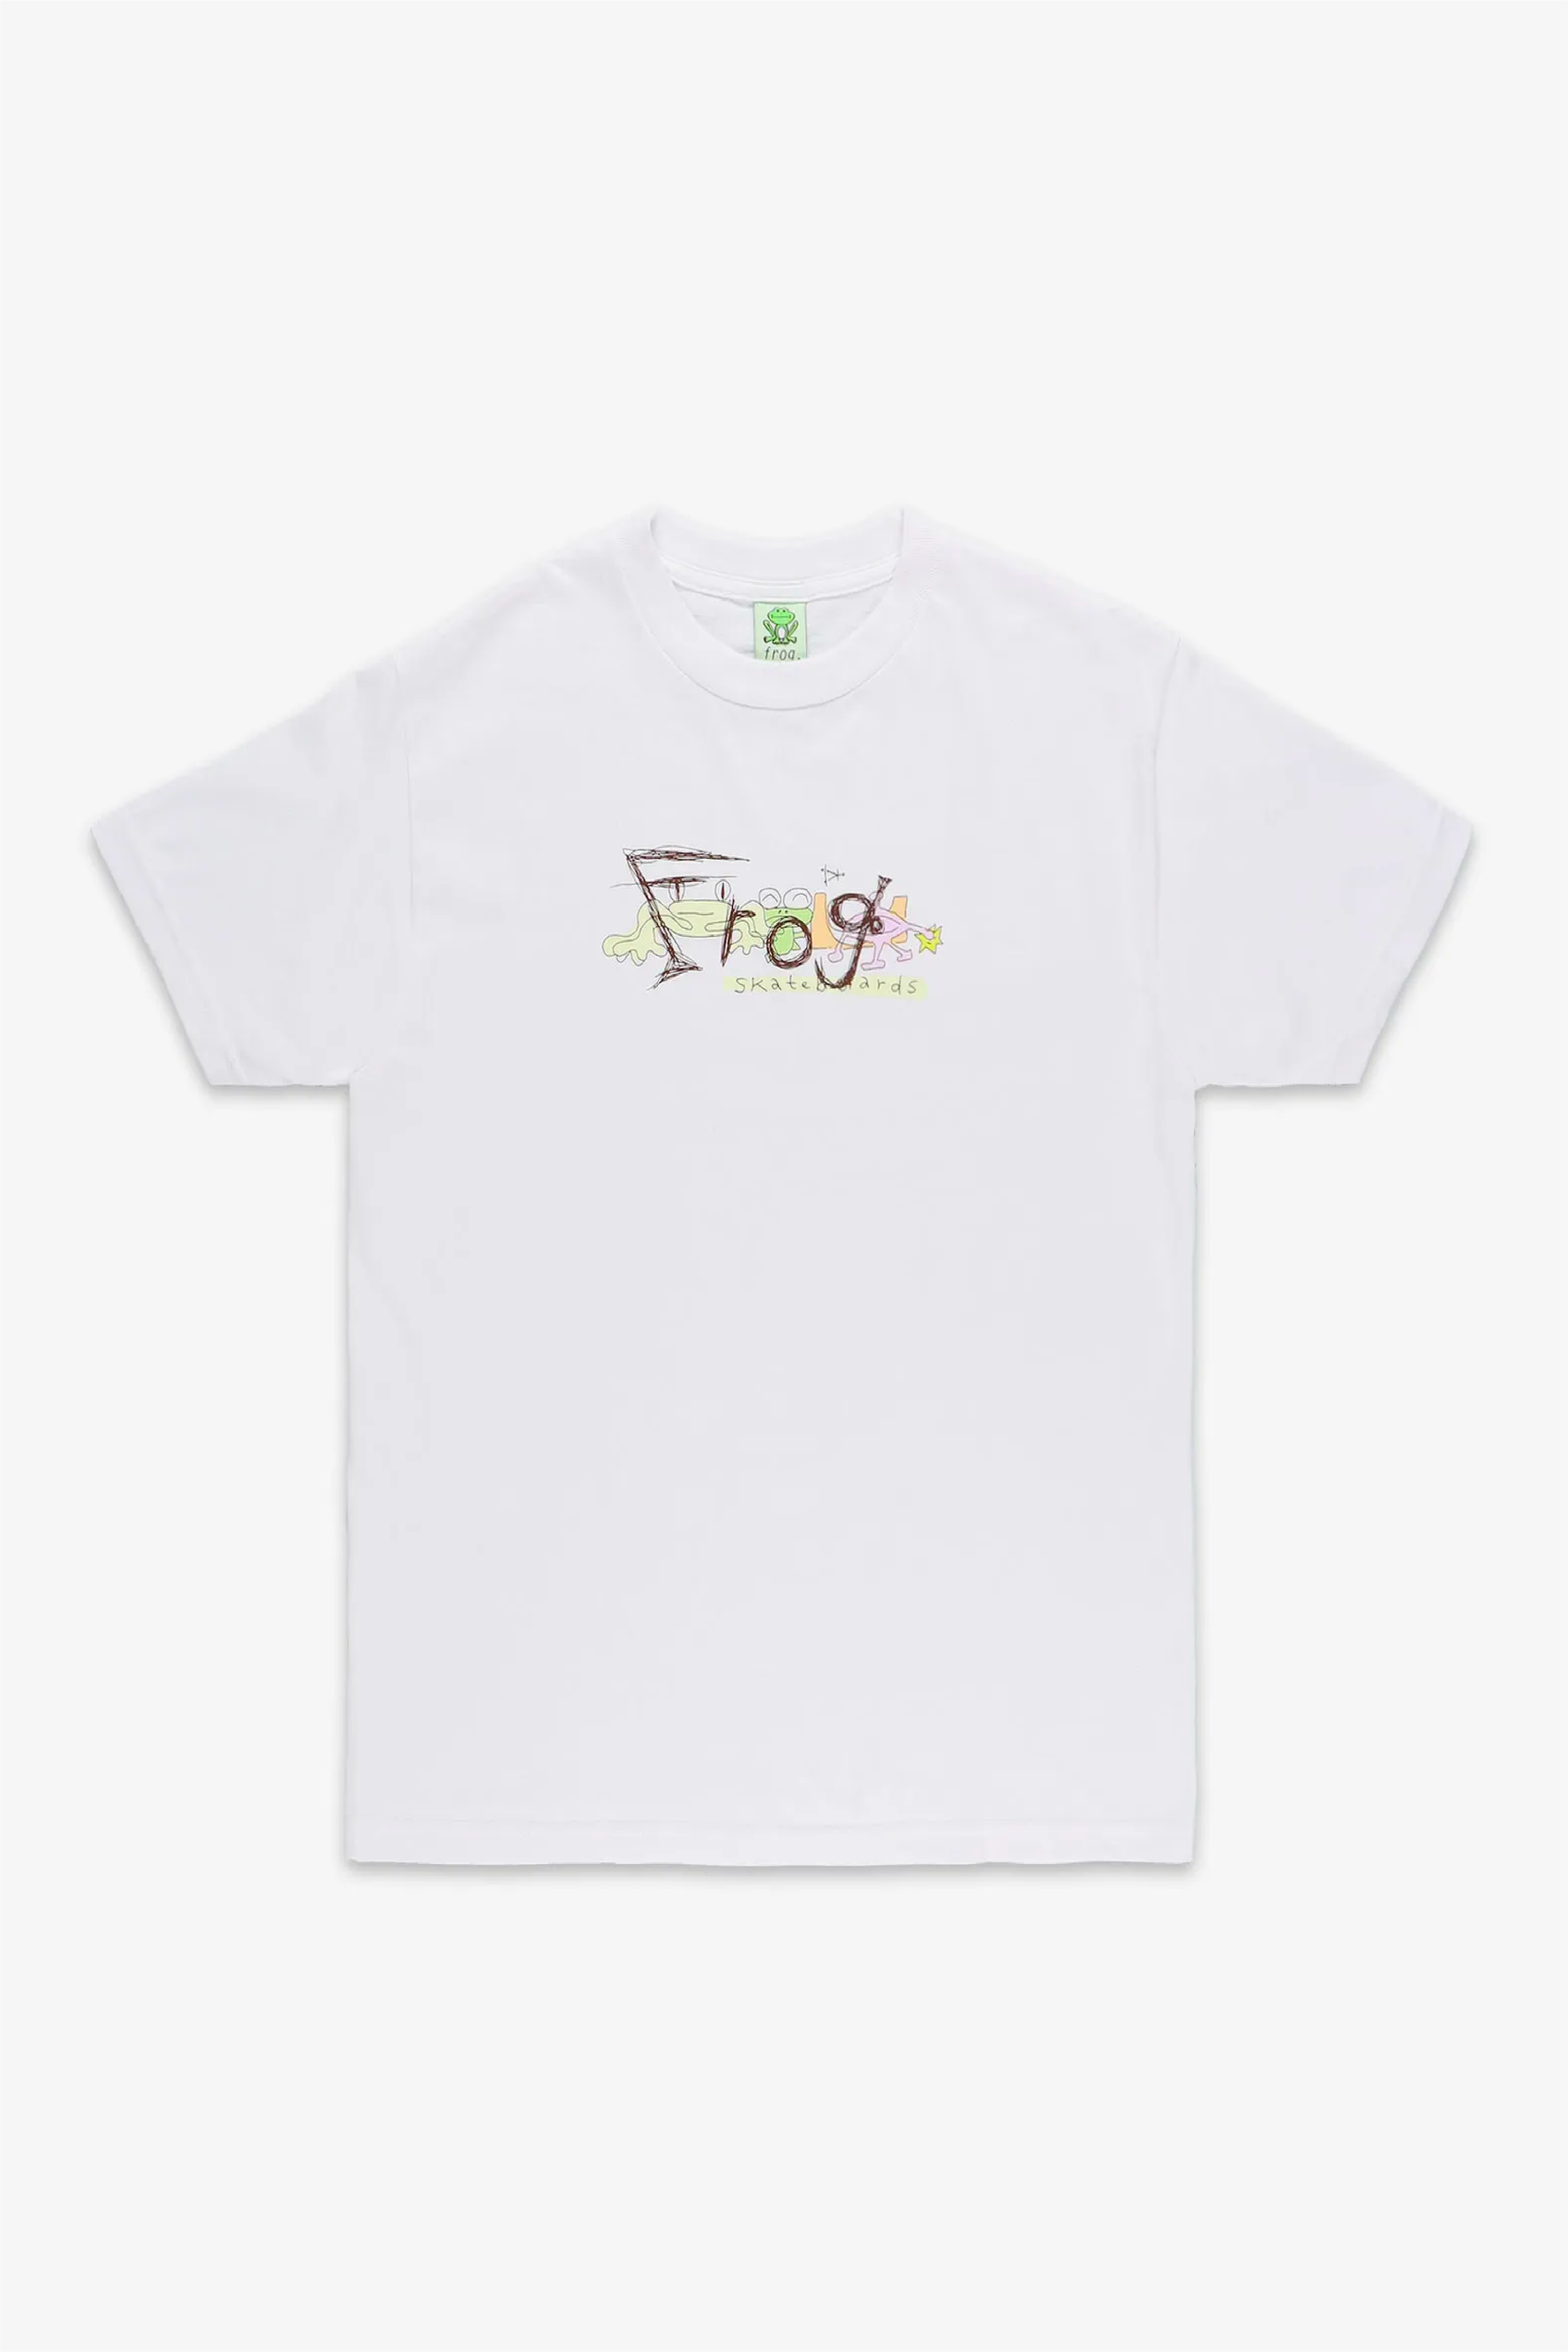 Selectshop FRAME - FROG SKATEBOARDS Busy Frog Tee T-Shirts Dubai